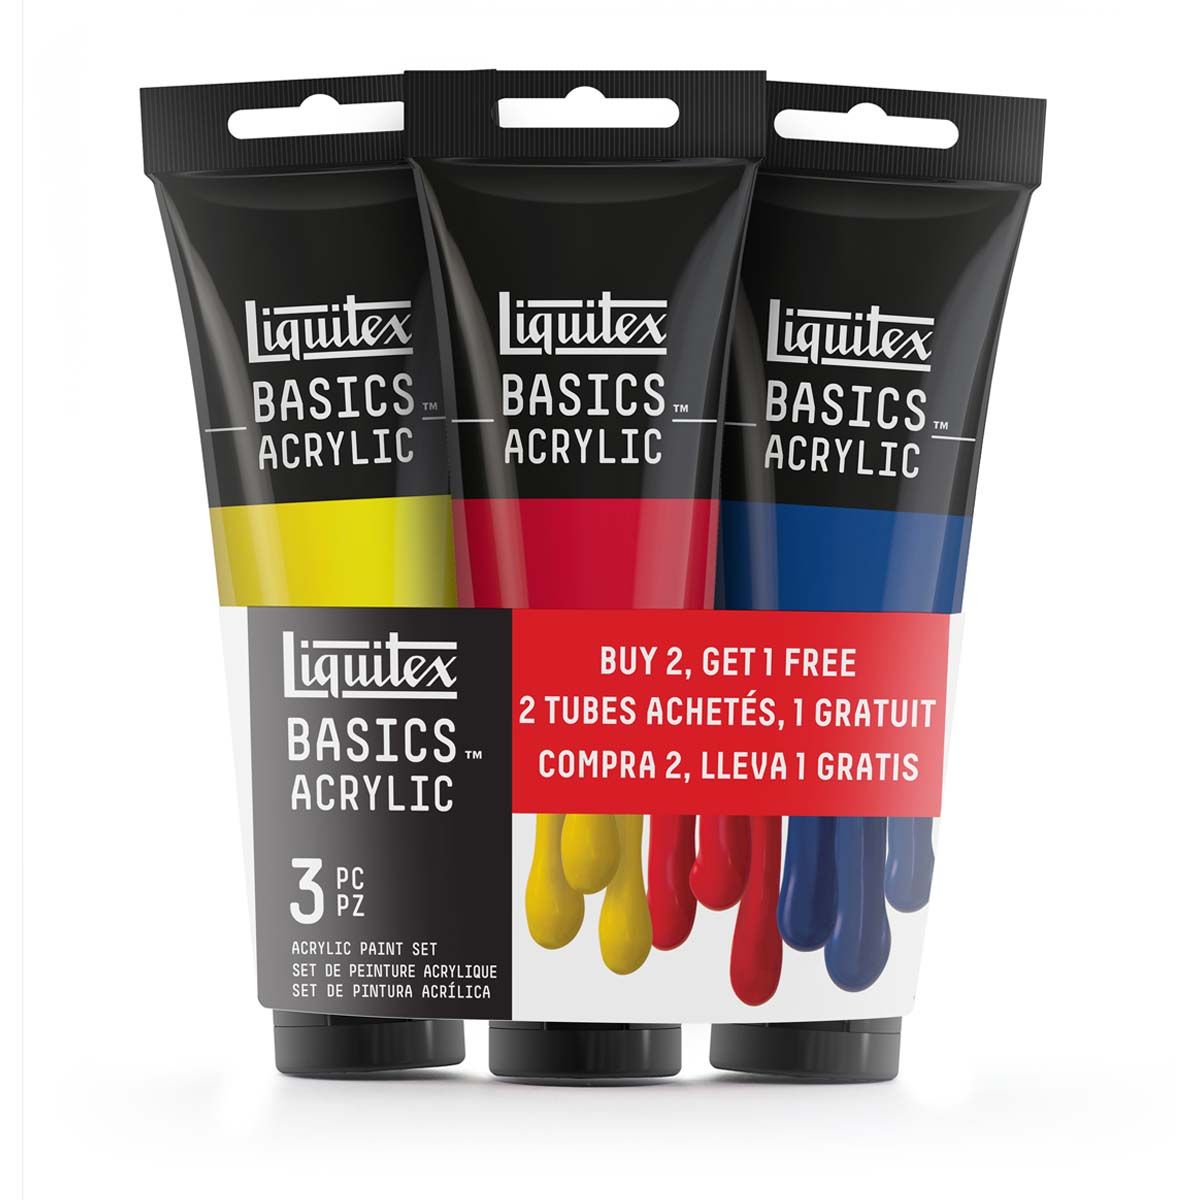 12 Pack: Liquitex BASICS® Acrylic Paint, 4oz.